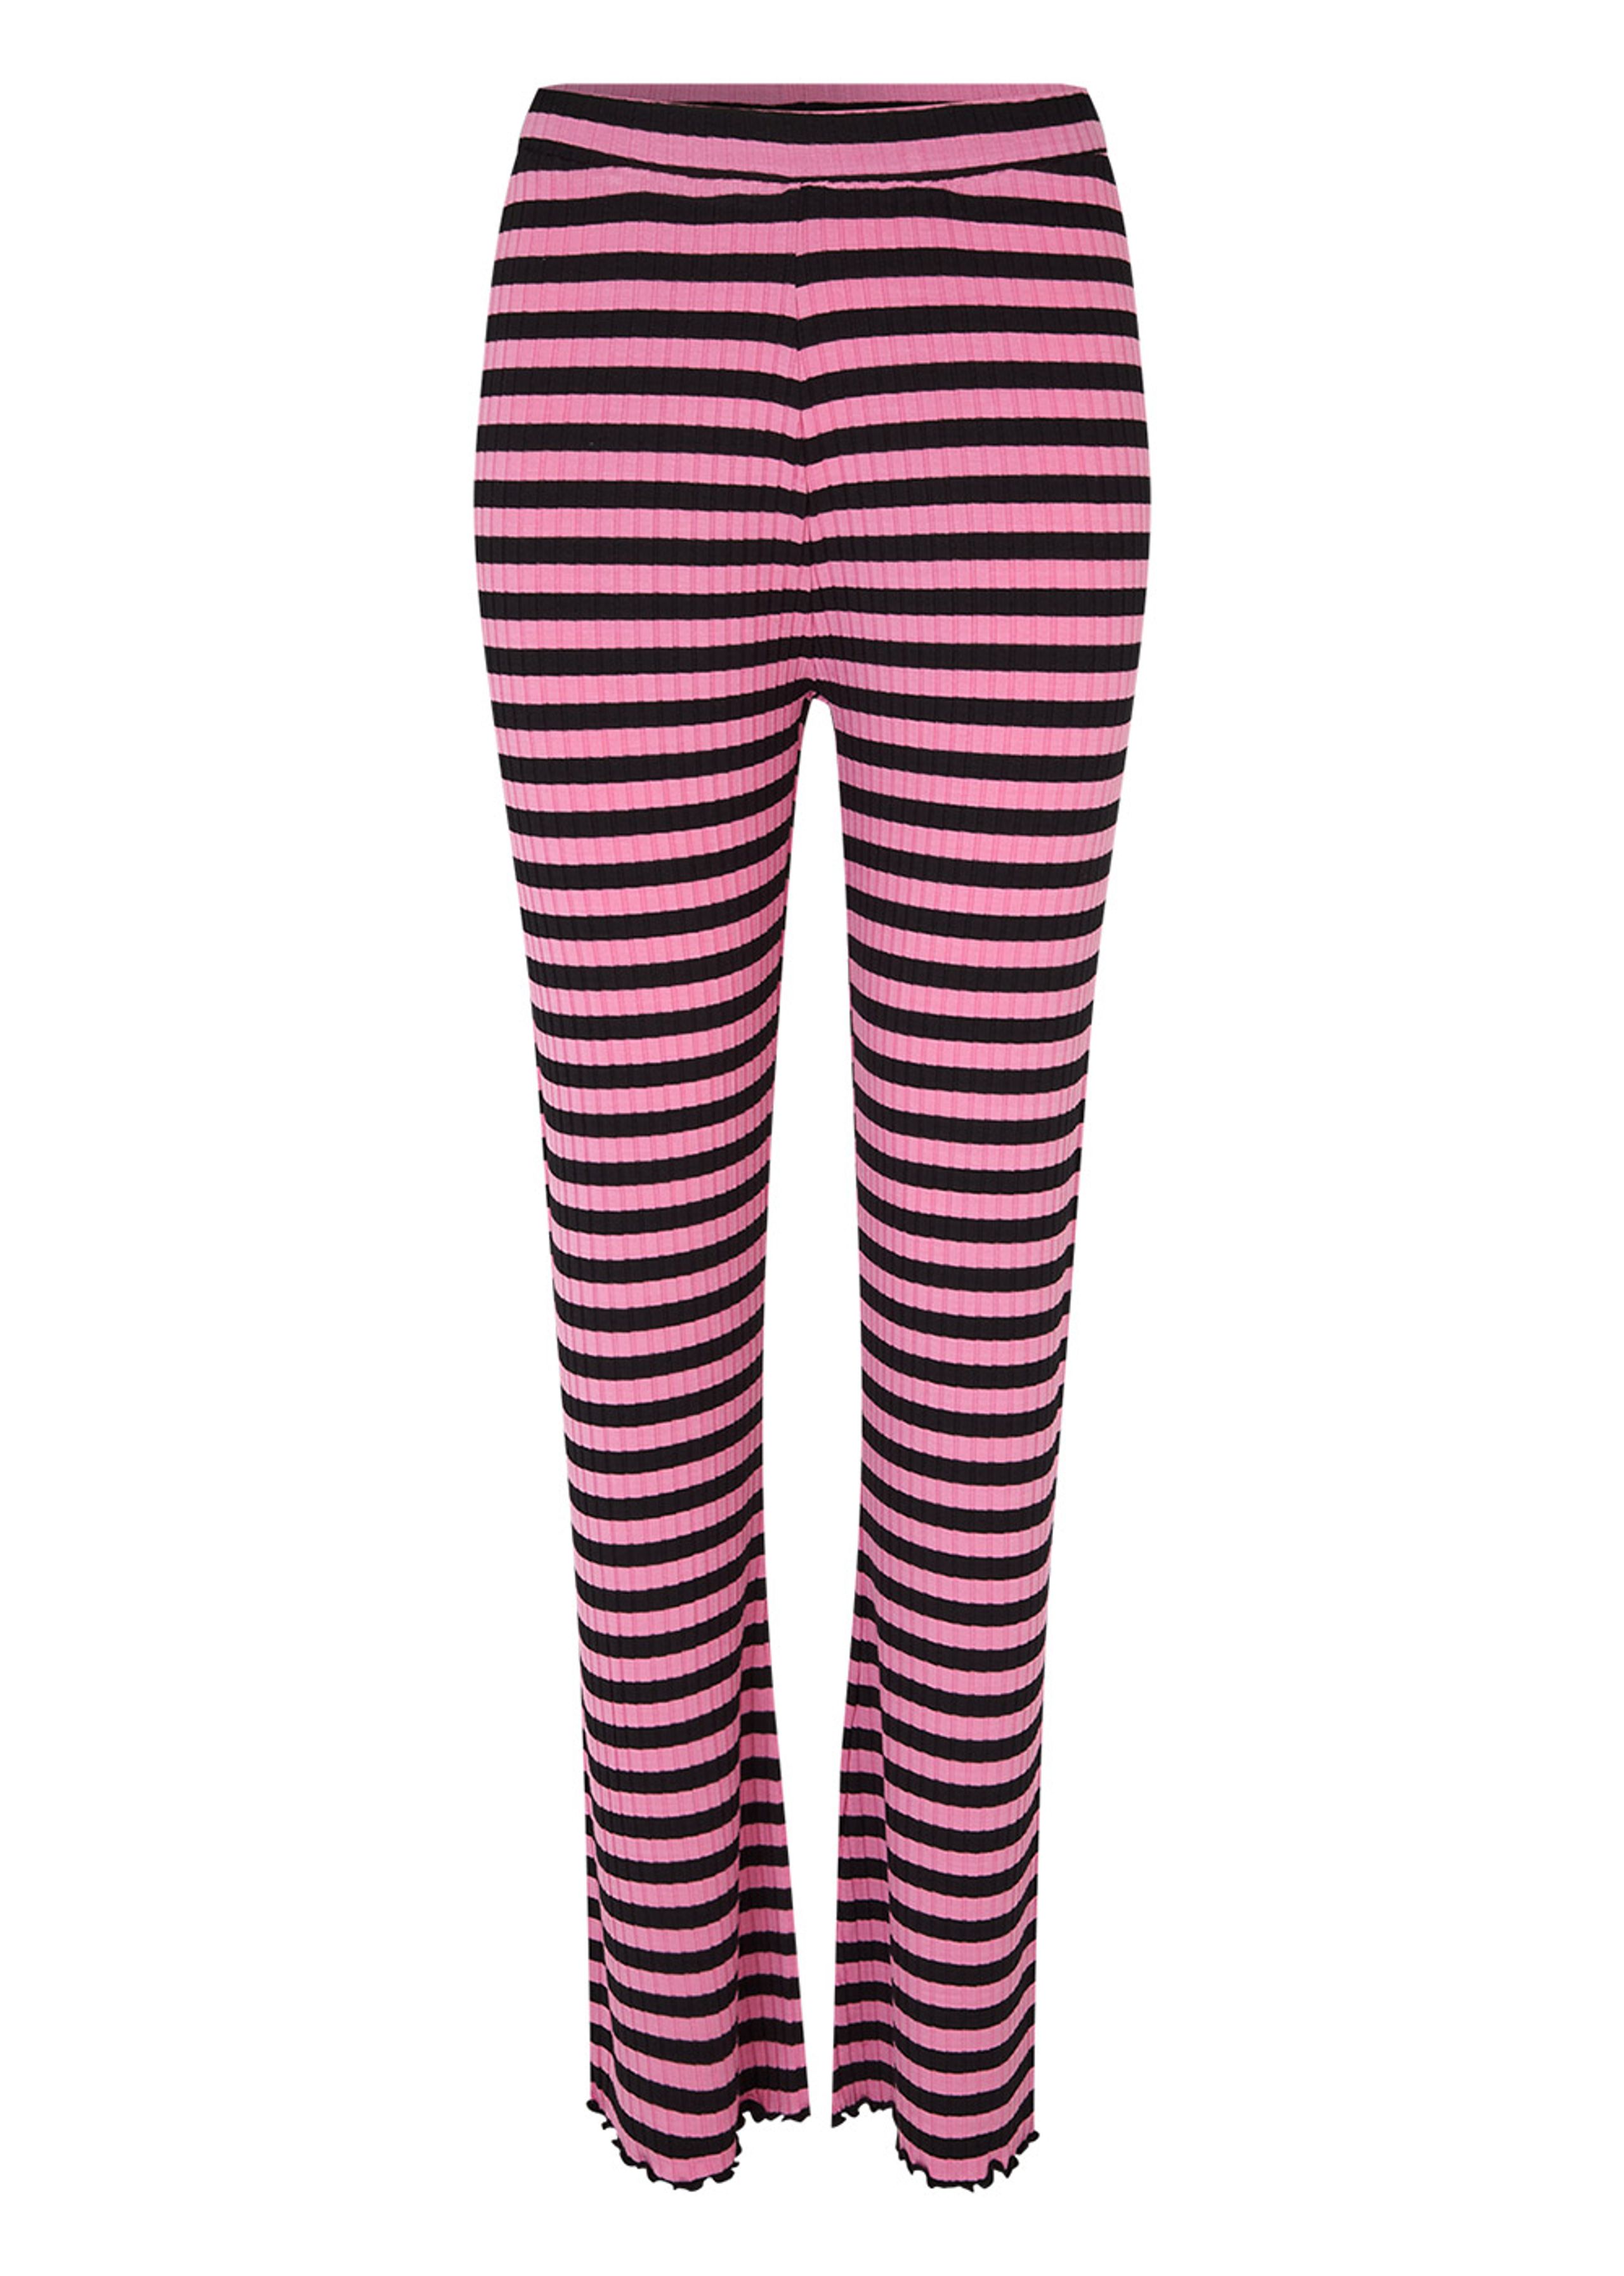 Mads Nørgaard - Pantalon - 5x5 Stripe Lonnie Pants - 5x5 Stripe/Begonia Pink